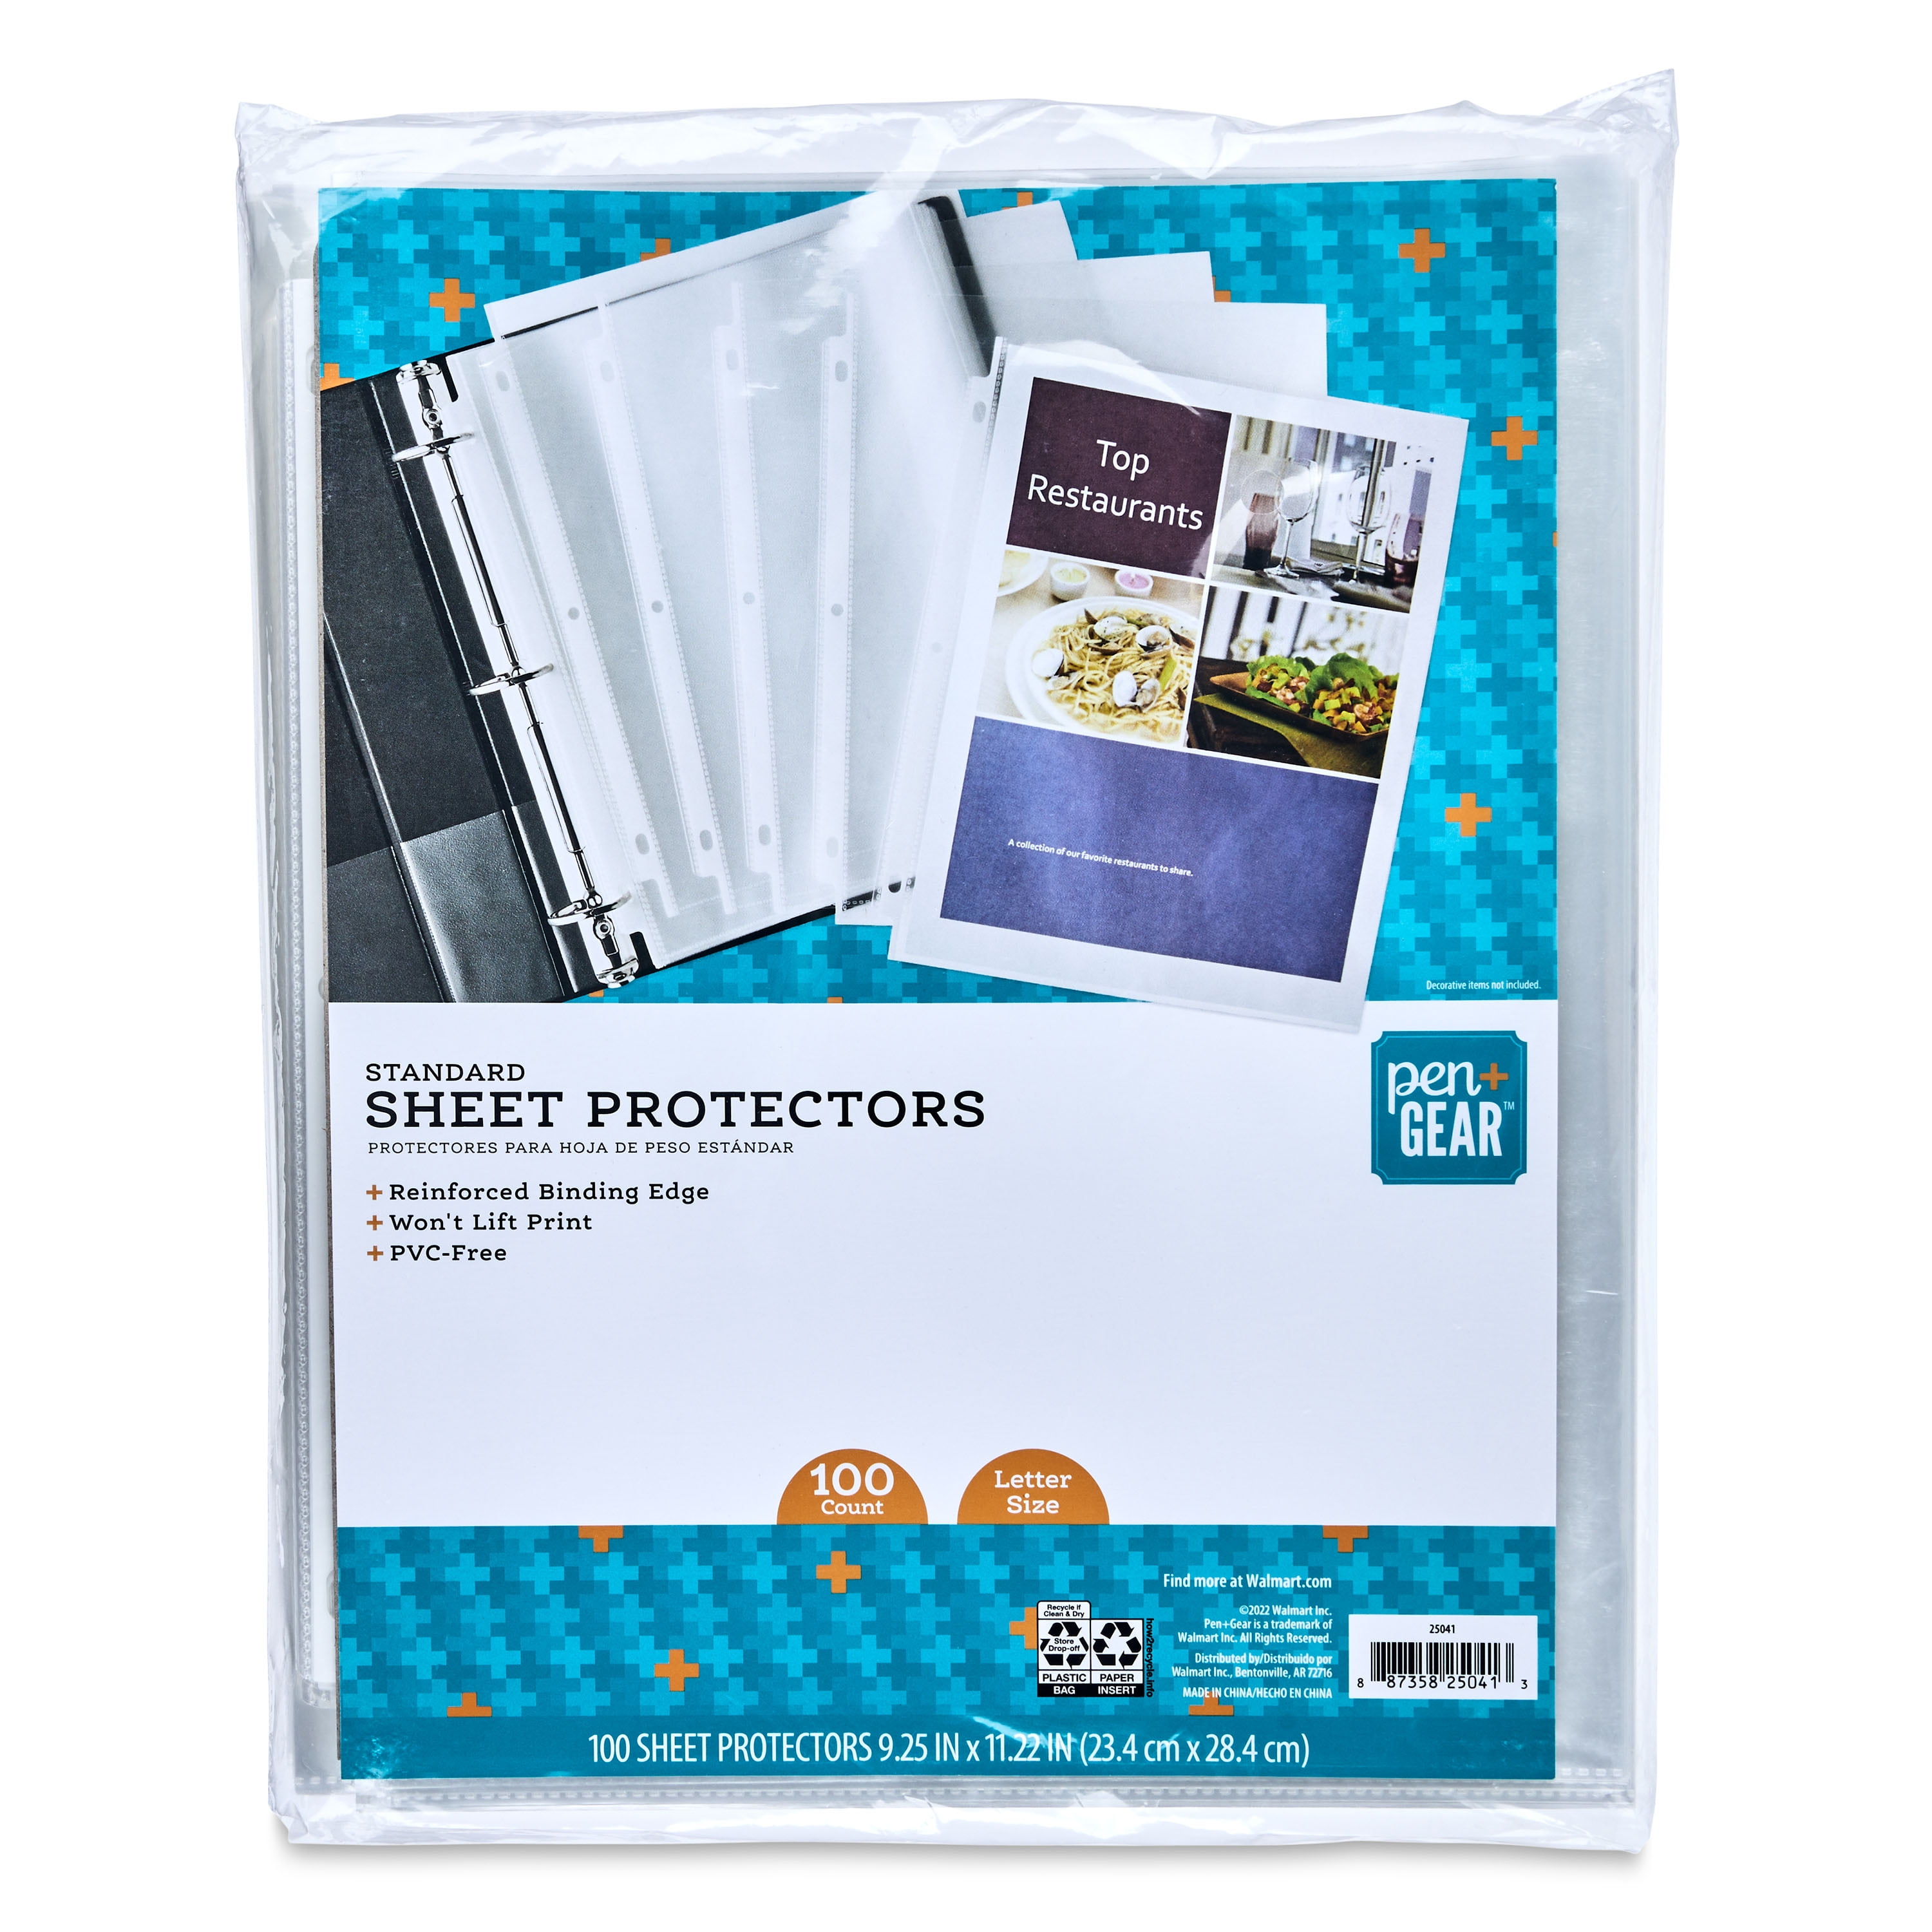 Colored Polypropylene Sheet Protectors, Assorted Colors, 2, 11 x 8.5,  50/Box - mastersupplyonline